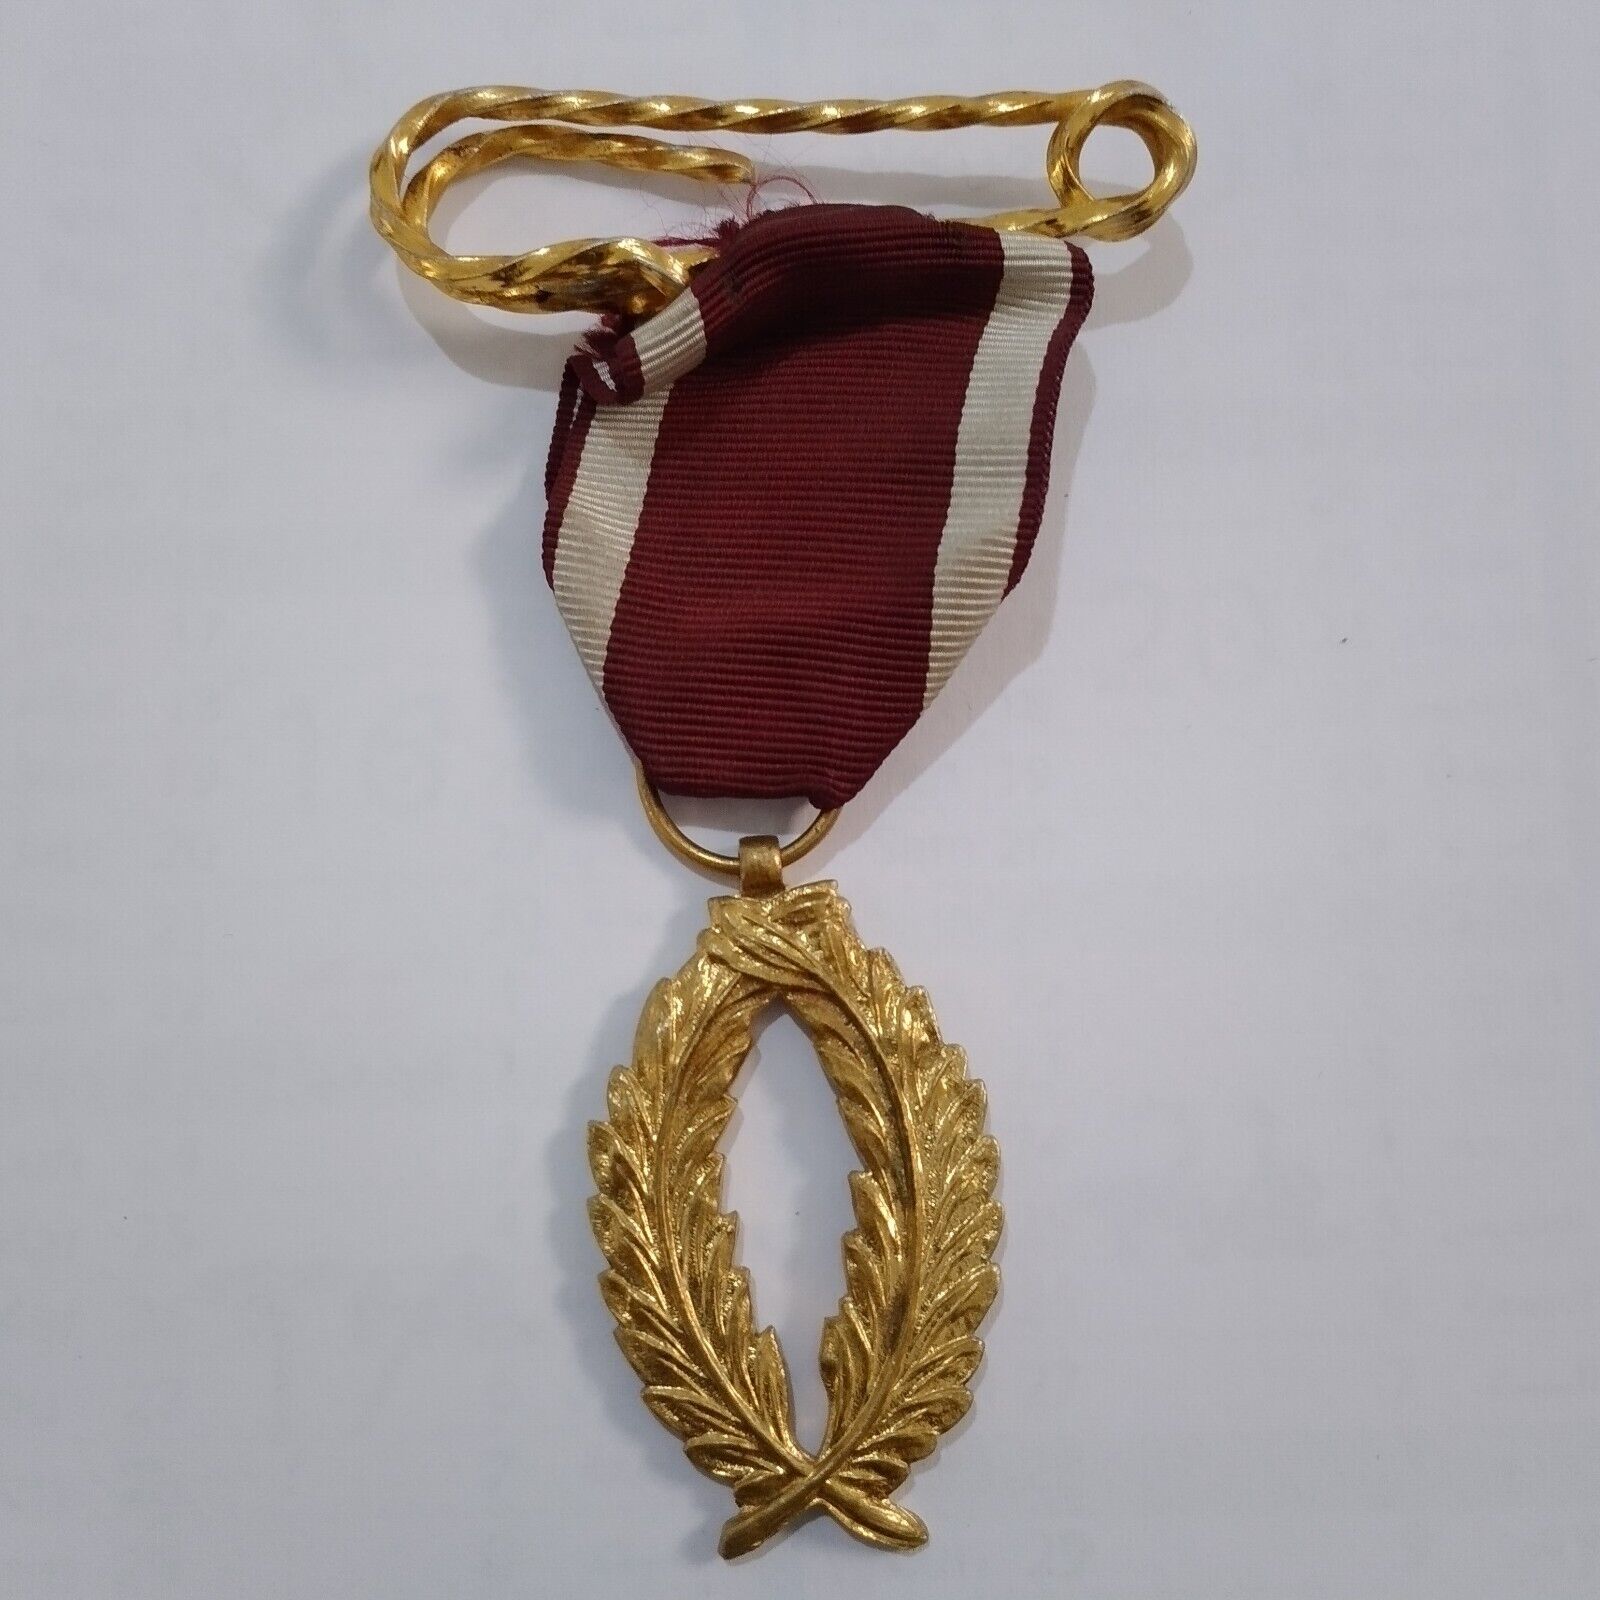 BELGIUM Old Belgian Medal PALMES D'OR Order of the Crown